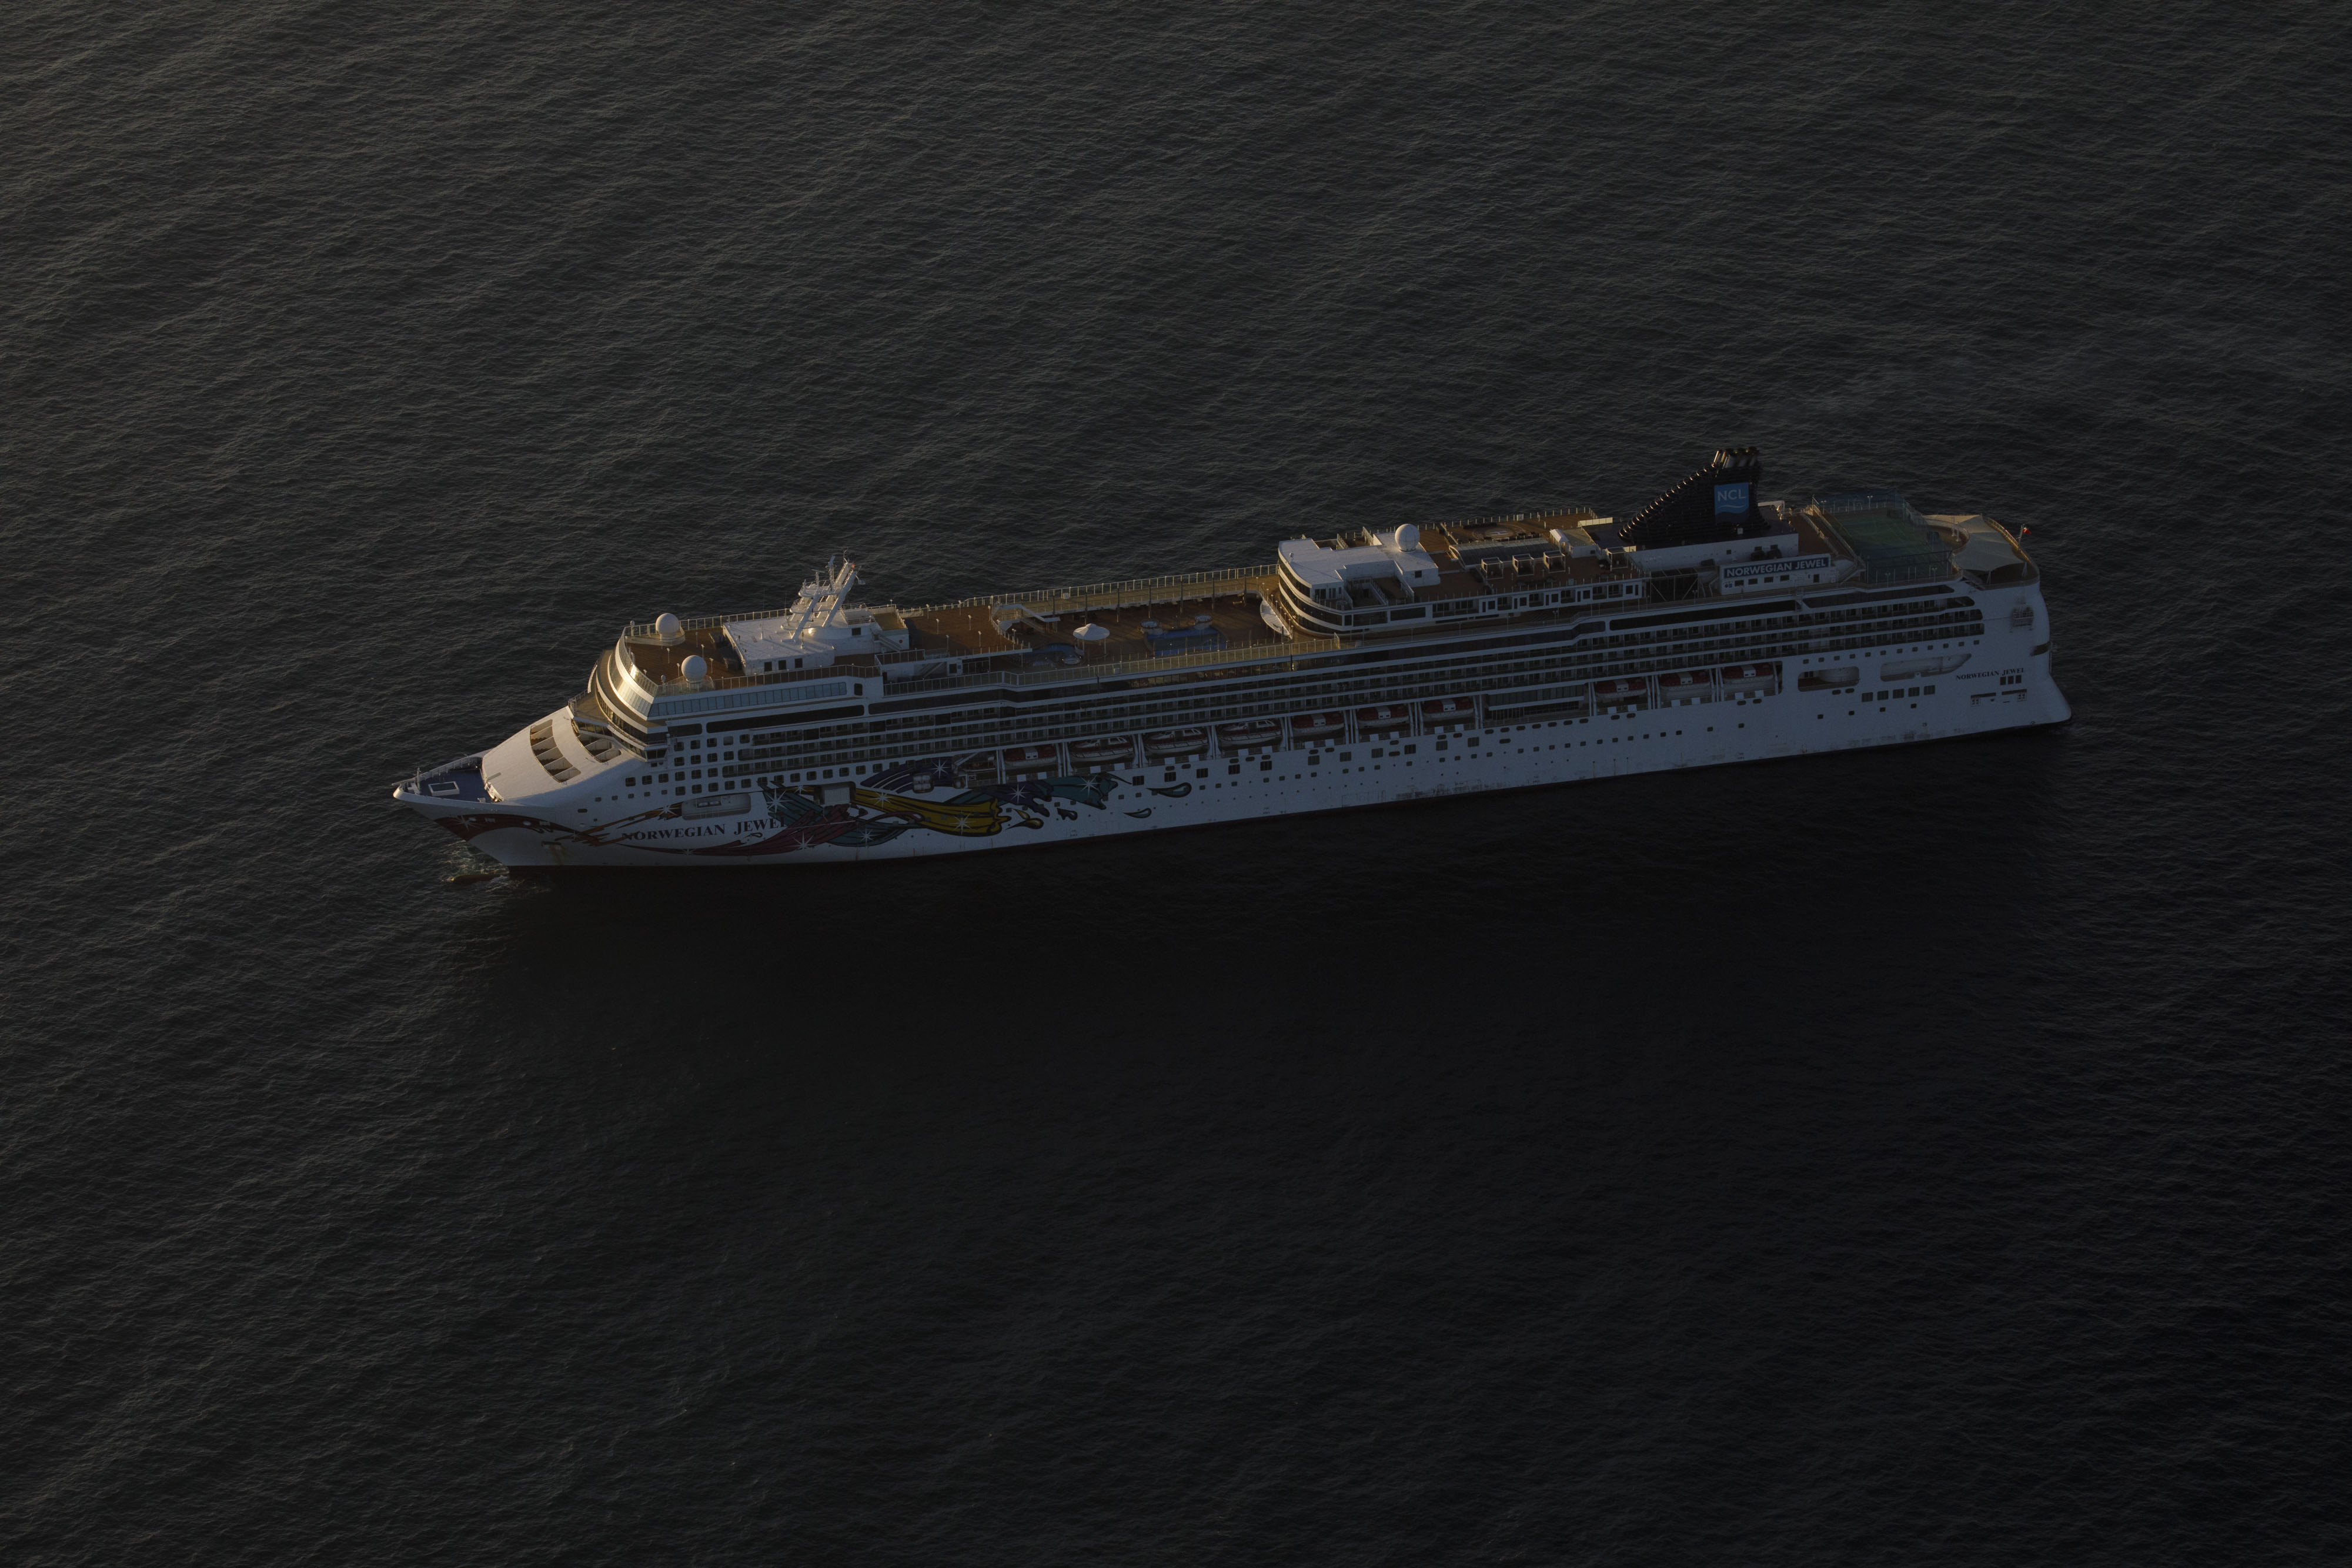 The Norwegian Cruise Line Holdings Ltd. Jewel cruise